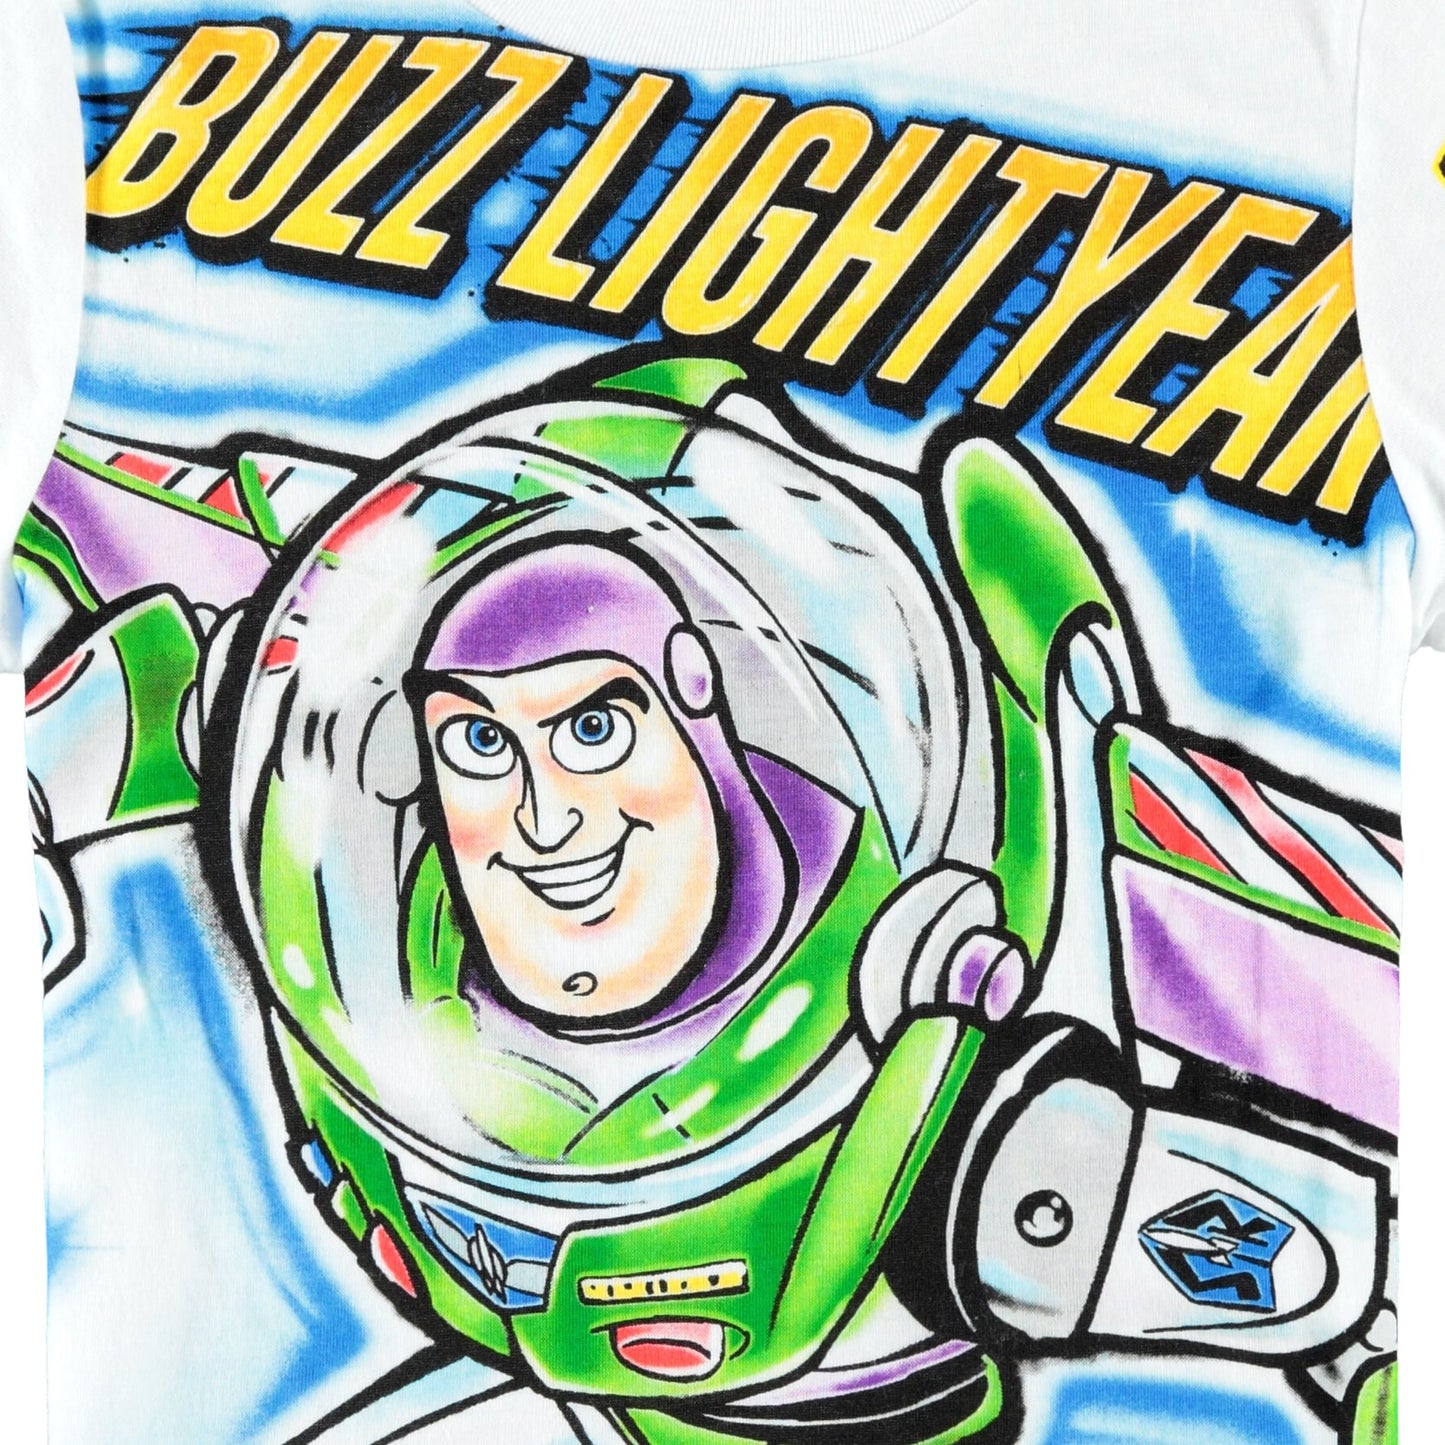 Disney Toy Story Boys Buzz Lightyear T-Shirt - Air Brushed Design Toy Story Boys T-Shirt